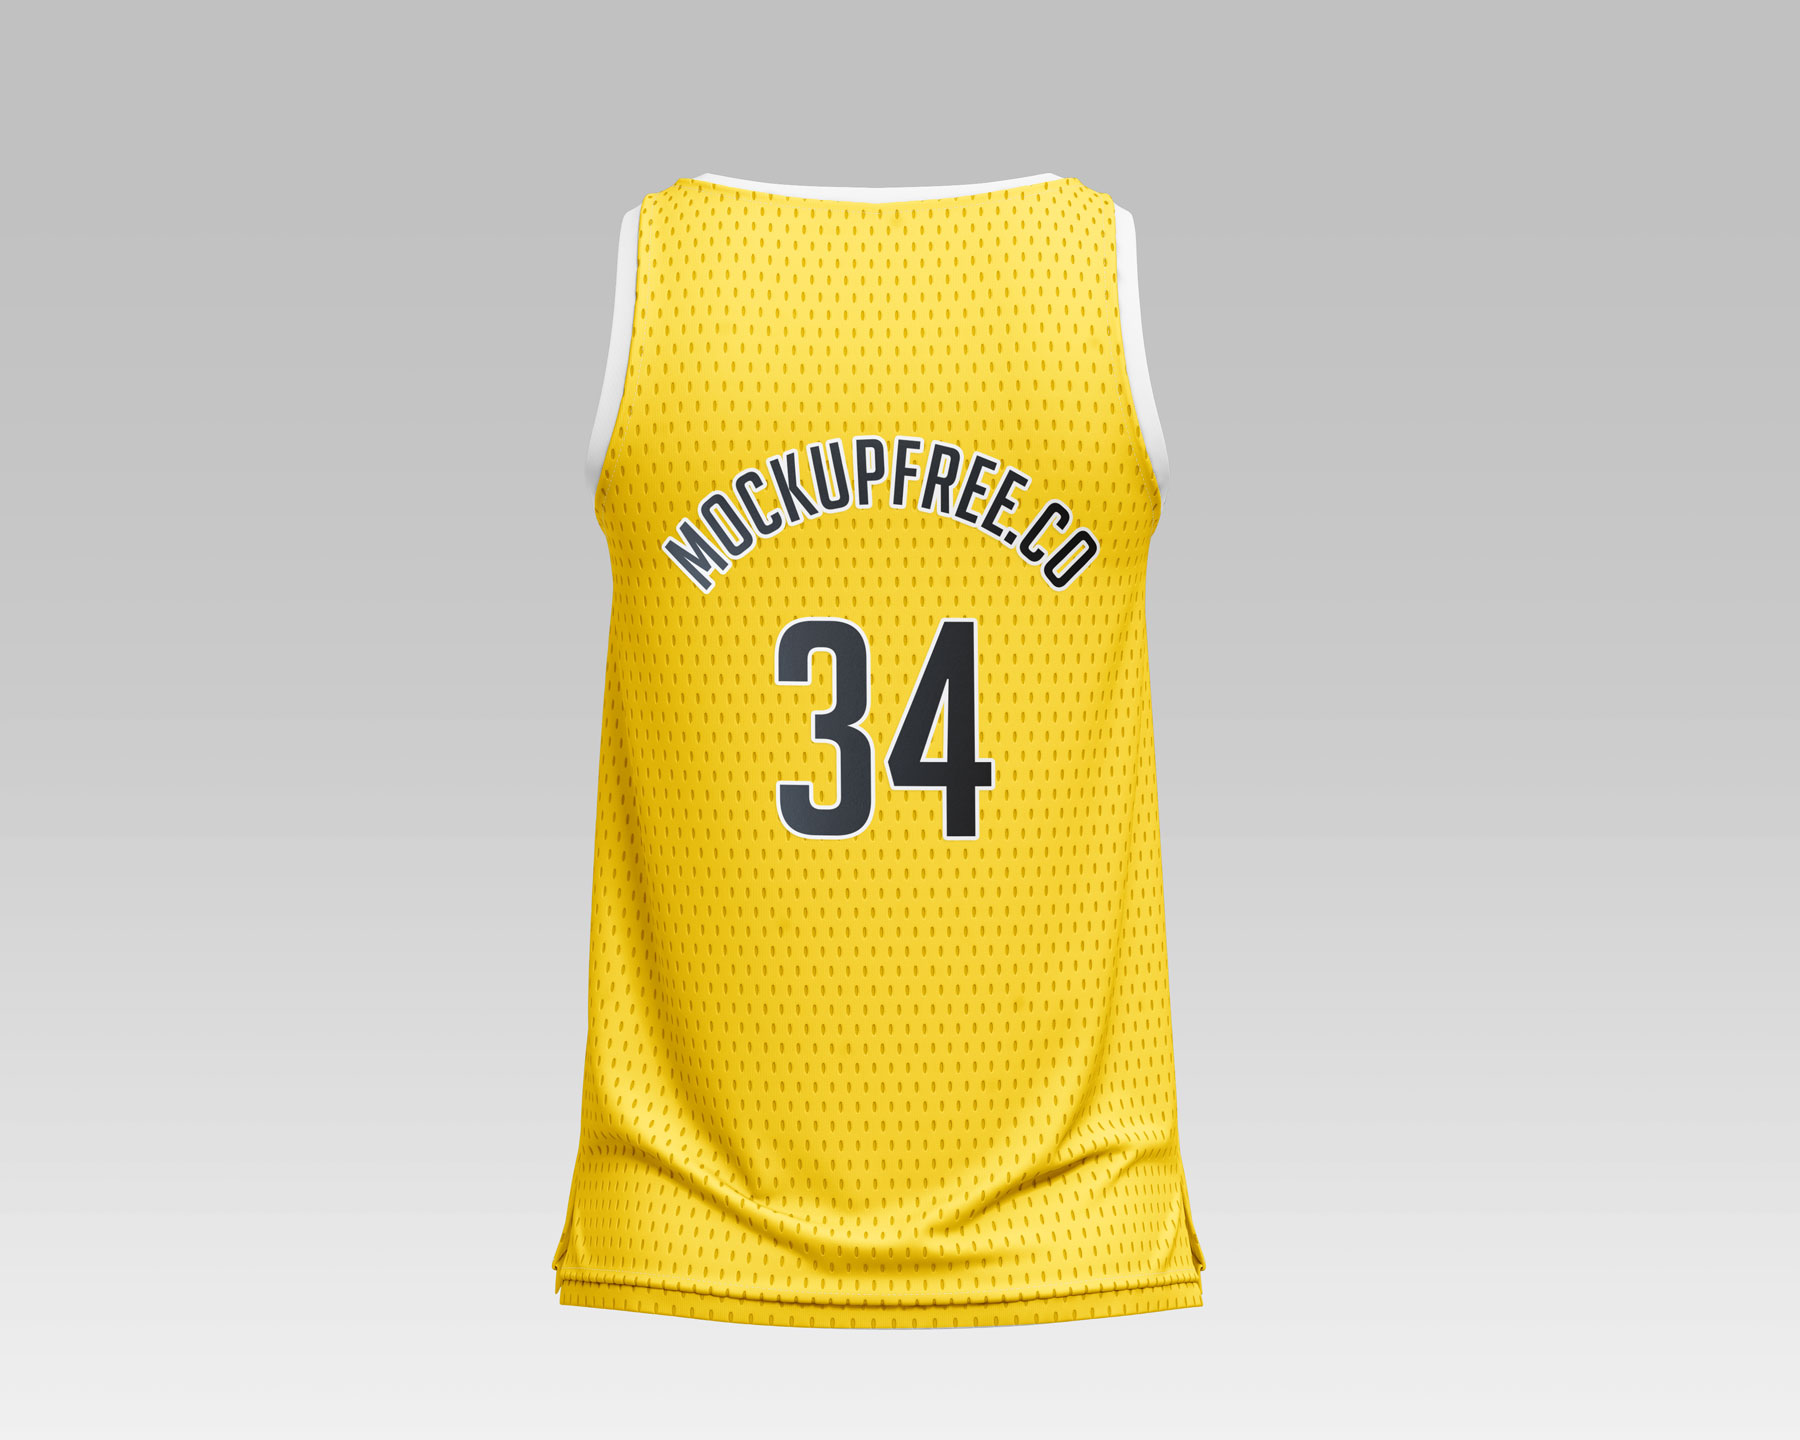 Free basketball sleeveless jersey mockup back view design